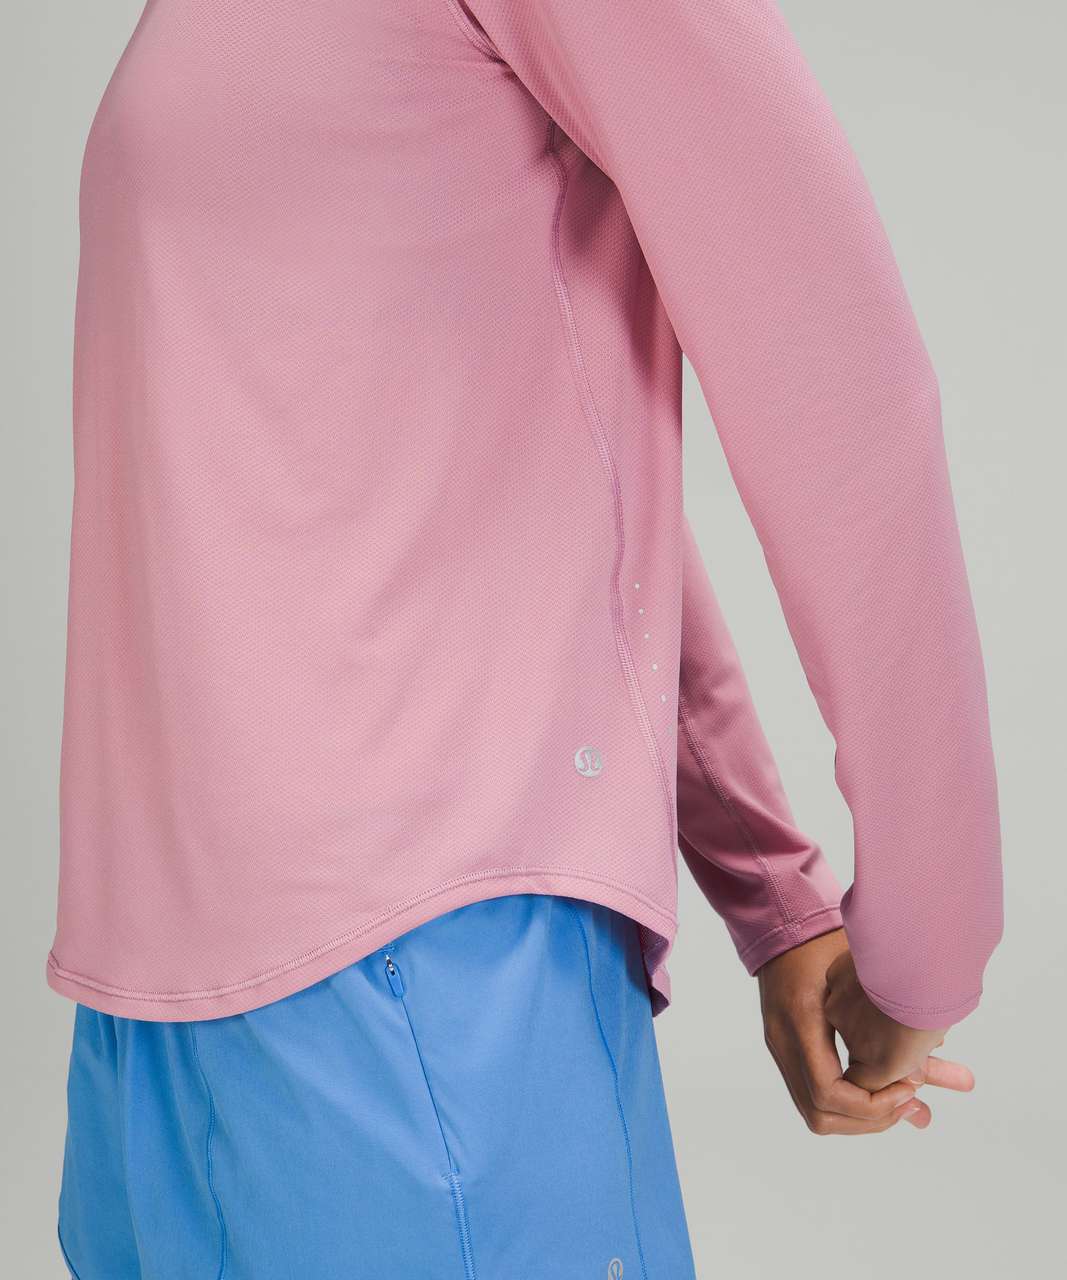 Lululemon High Neck Running and Training Long Sleeve Shirt - Pink Taupe